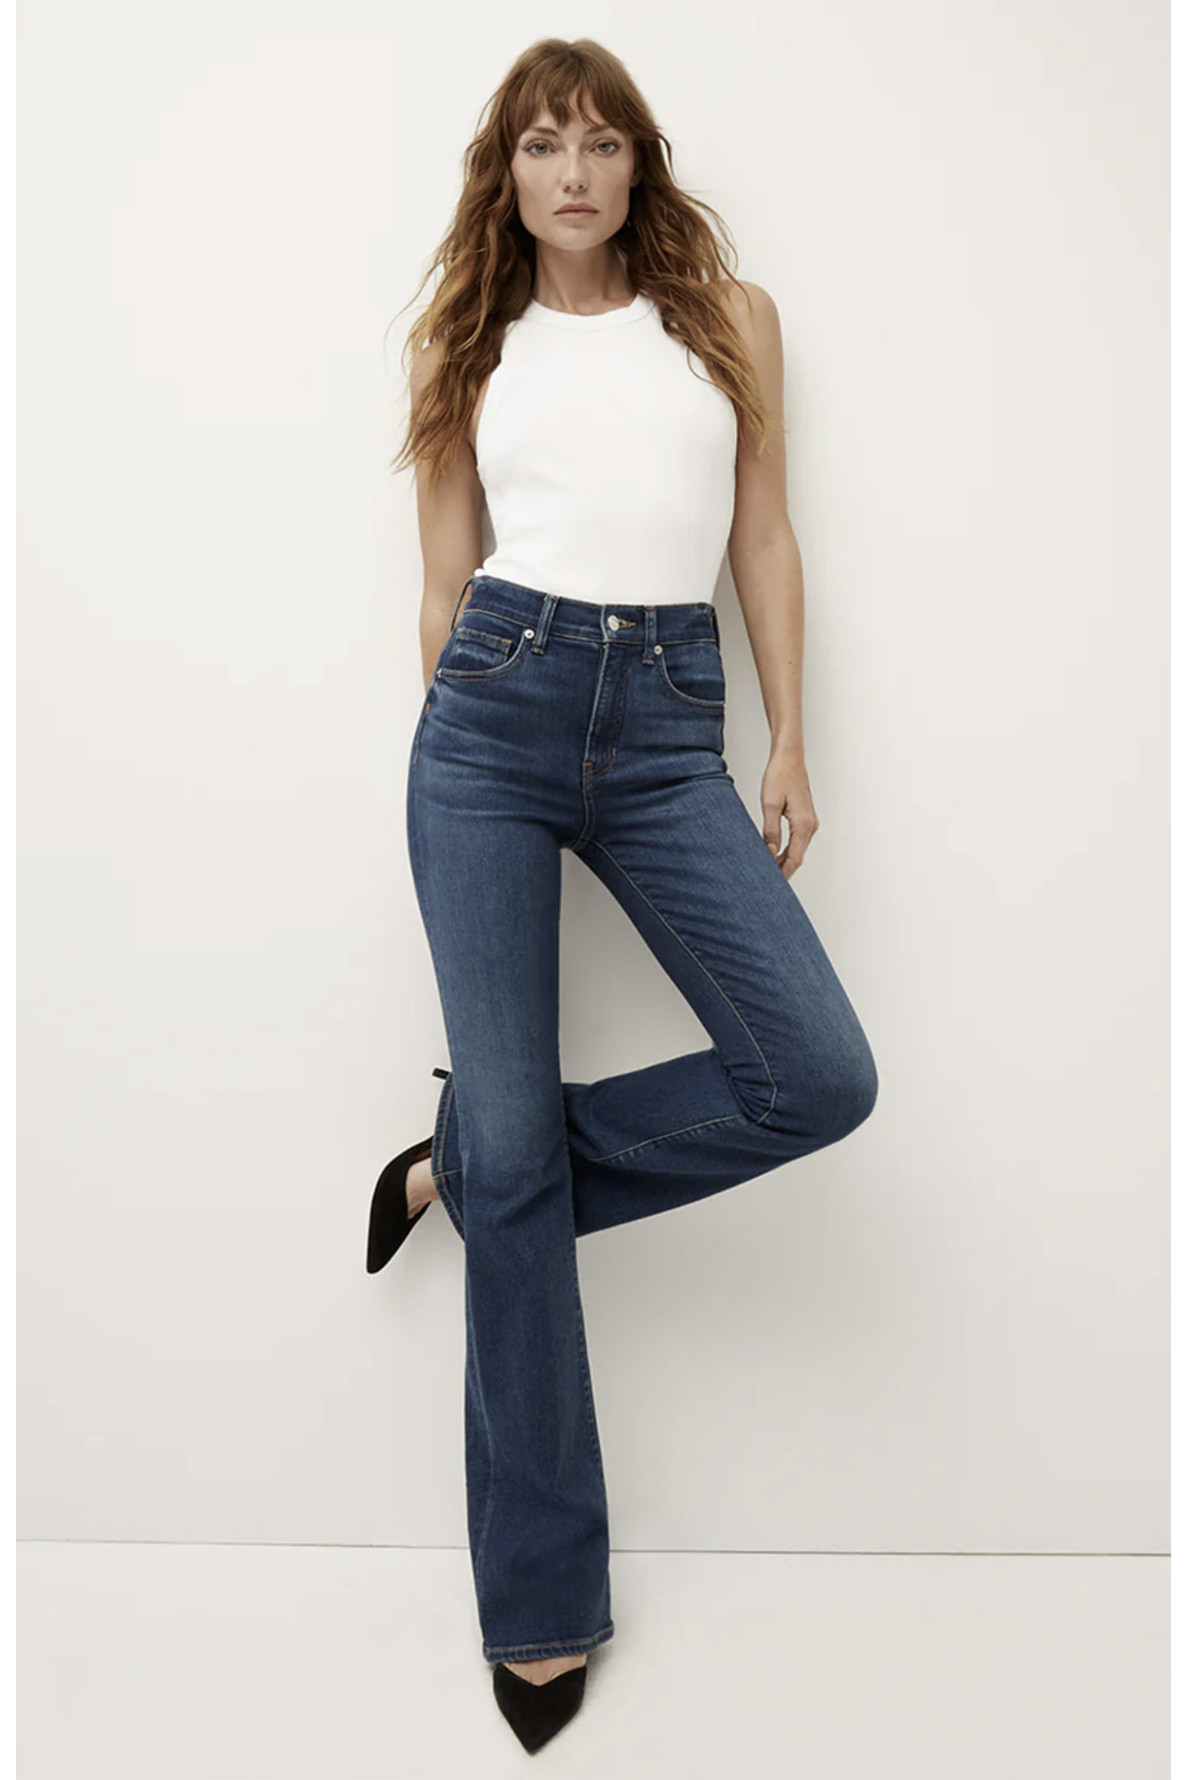 Beverly Jeans, Veronica Beard